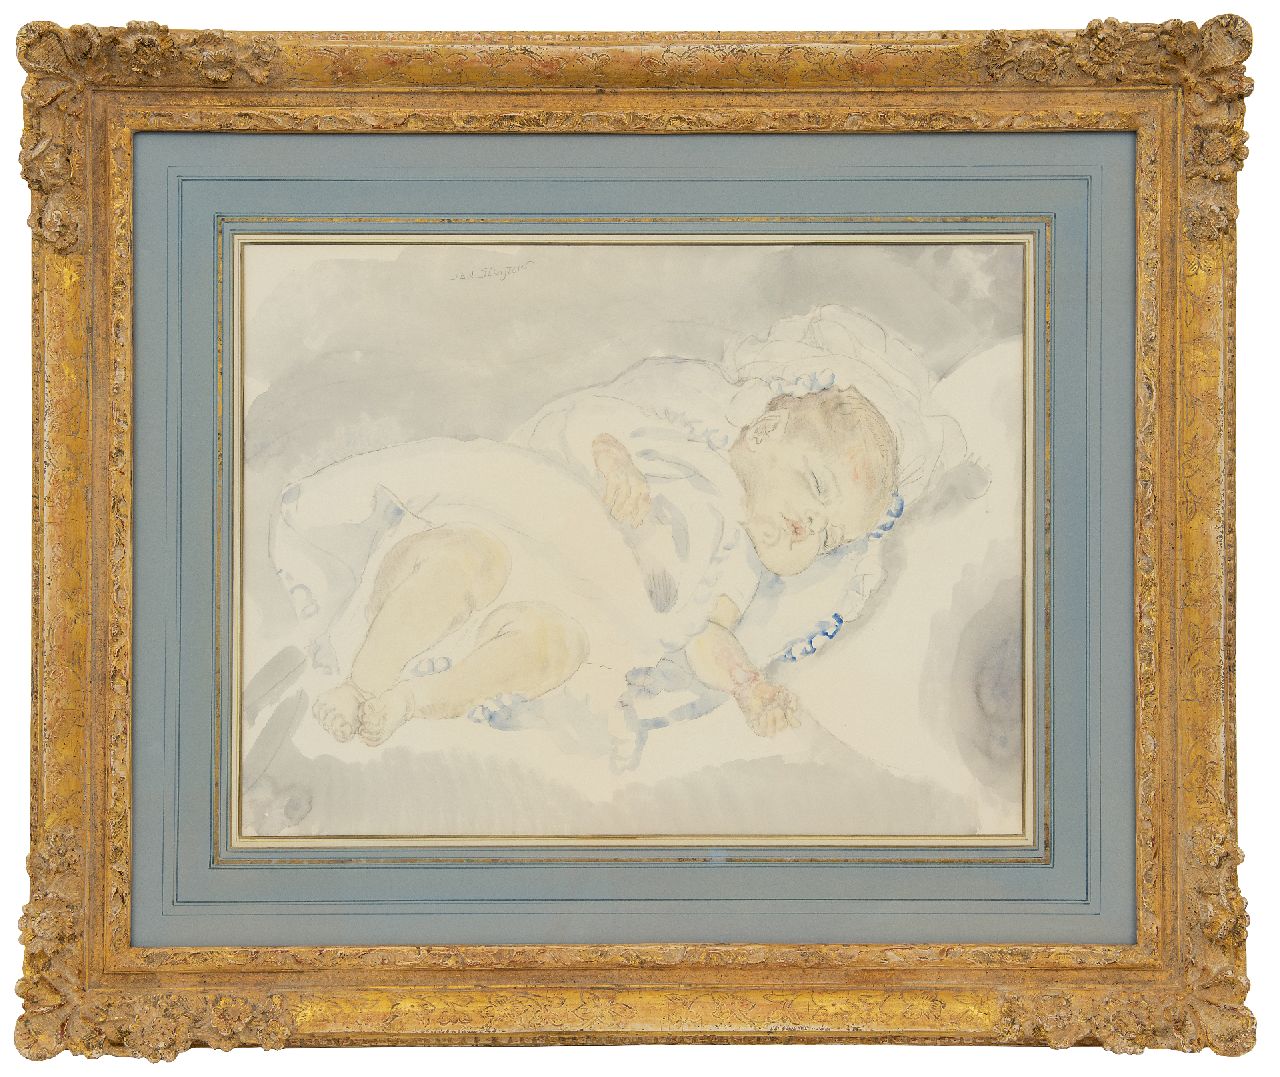 Sluijters J.C.B.  | Johannes Carolus Bernardus 'Jan' Sluijters | Watercolours and drawings offered for sale | Sleeping baby, pencil and watercolour on paper 46.5 x 58.5 cm, signed u.l.